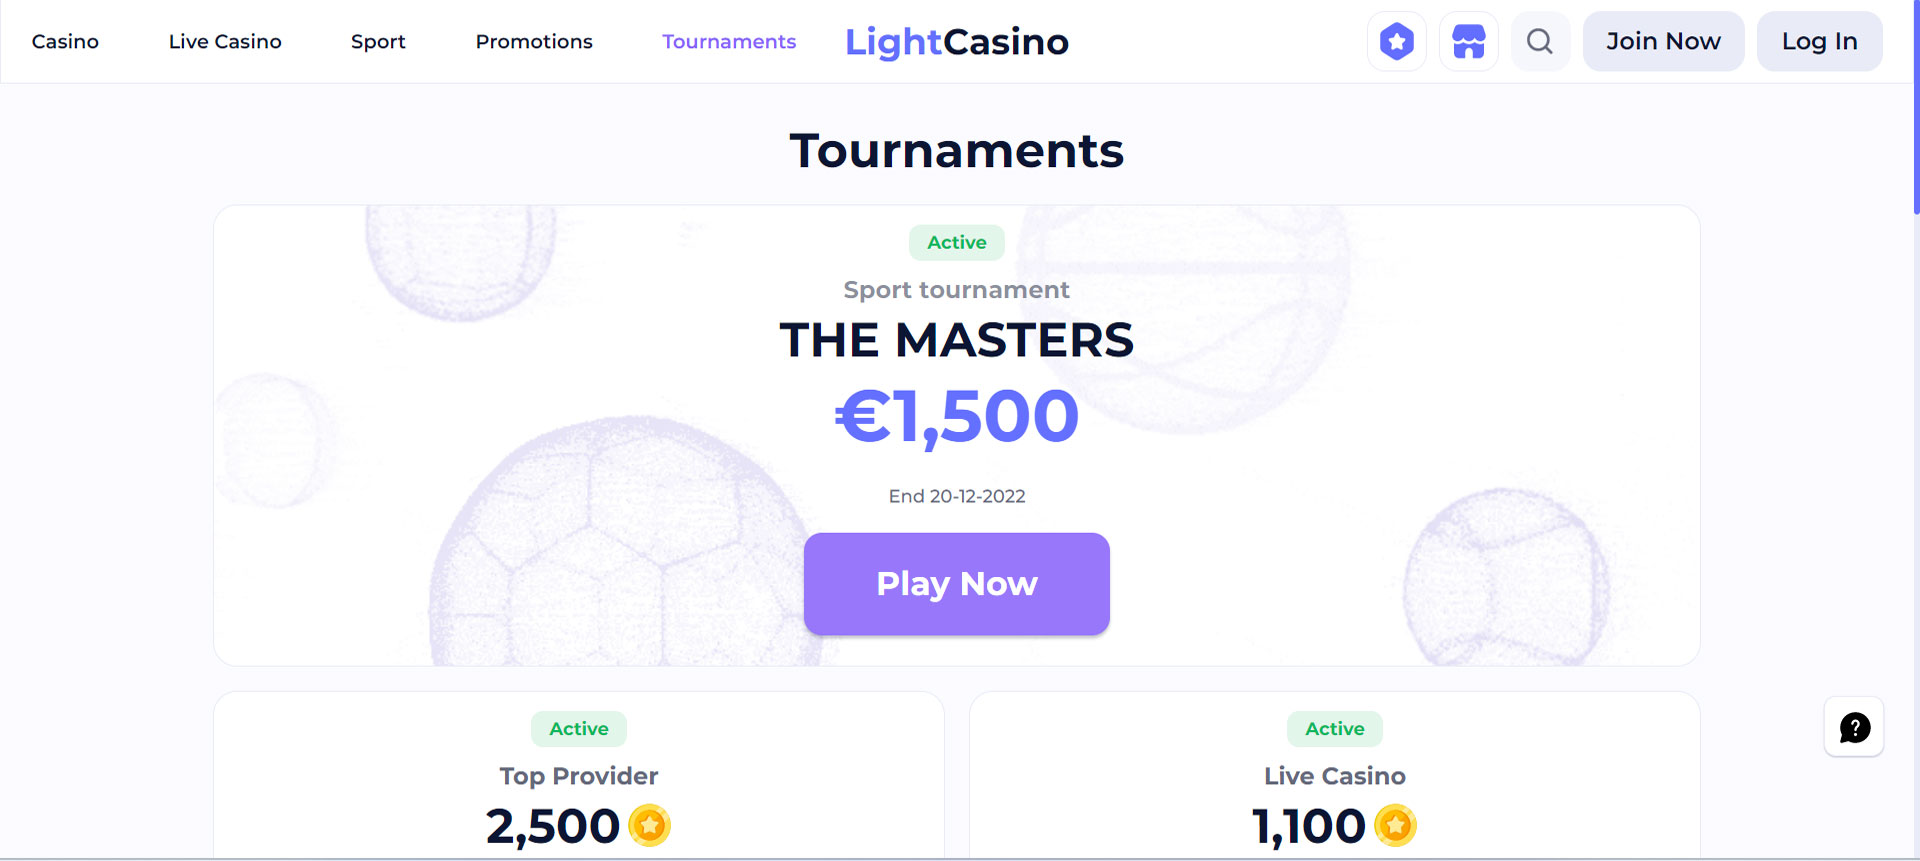 LightCasino Tournaments